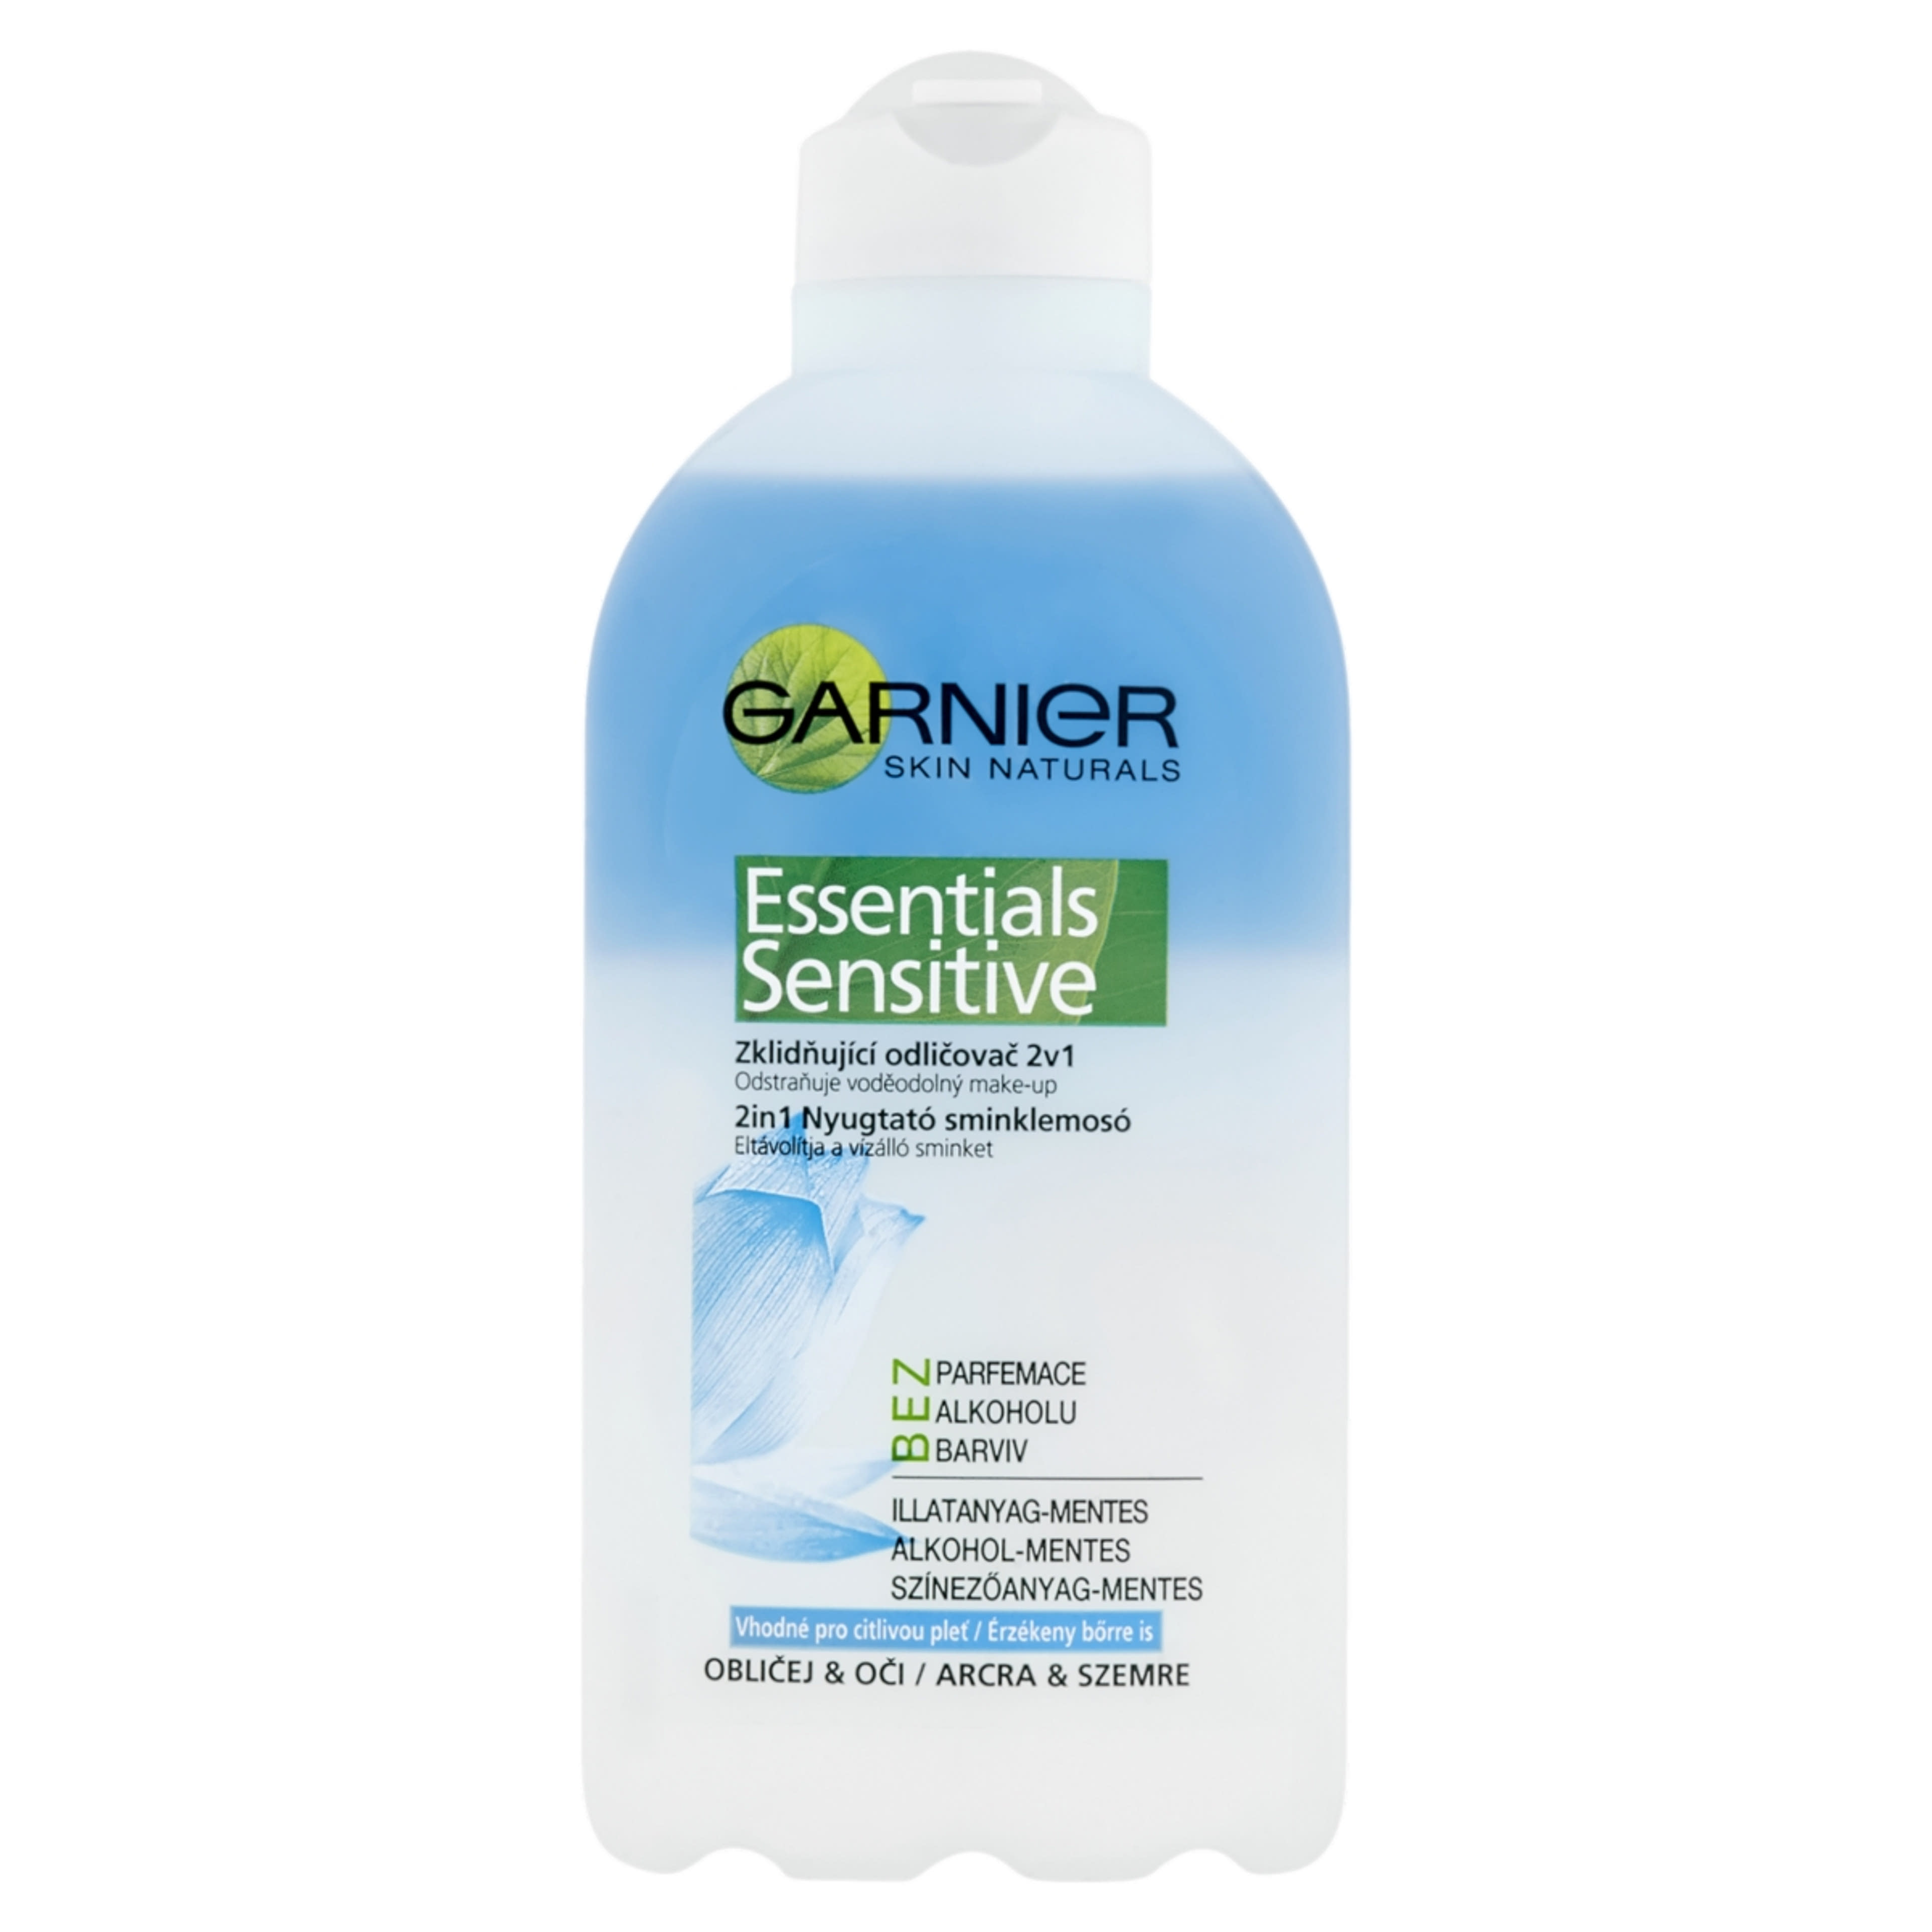 Garnier Skin Naturals 2in1 Nyugtató Sminklemosó - 200 ml-1